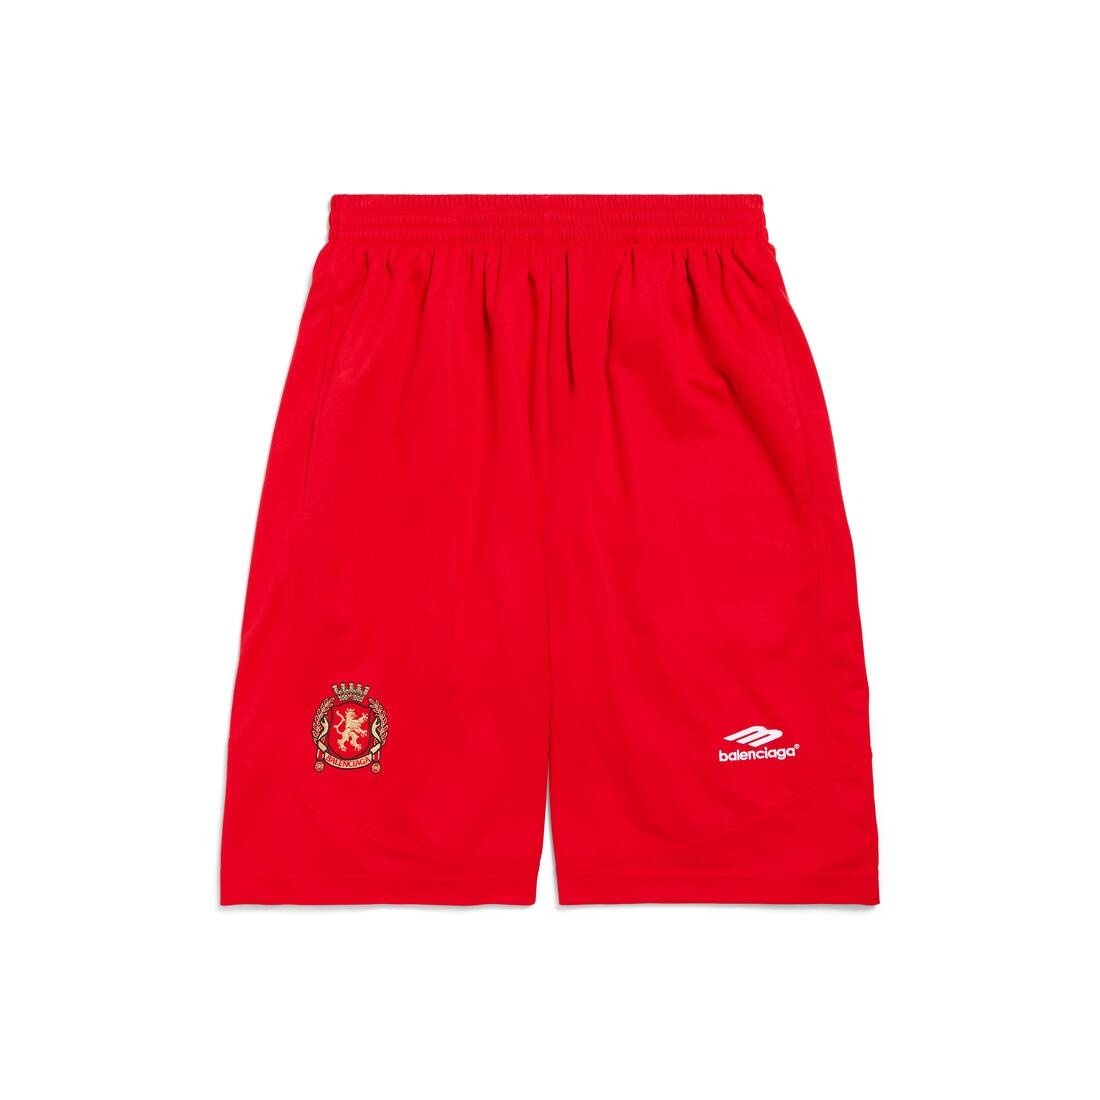 Men's Soccer Baggy Shorts in Red/white - 1